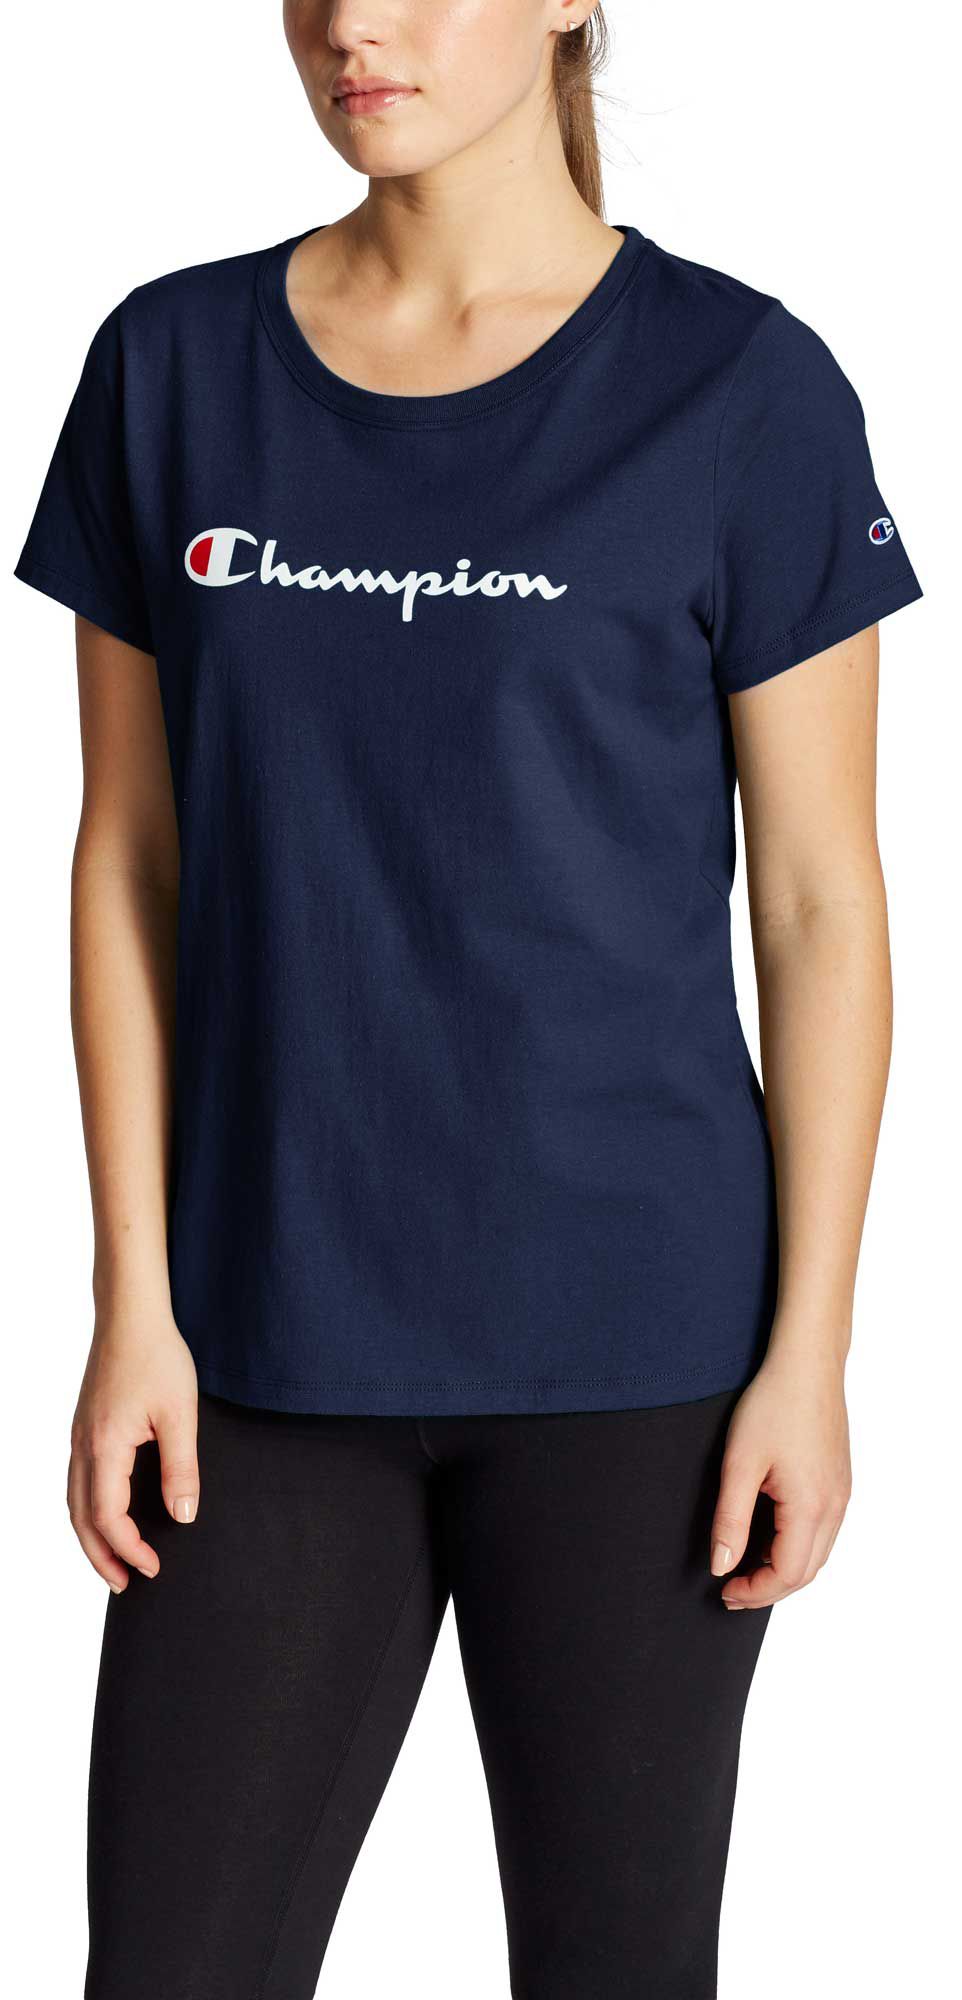 champion shirt womens